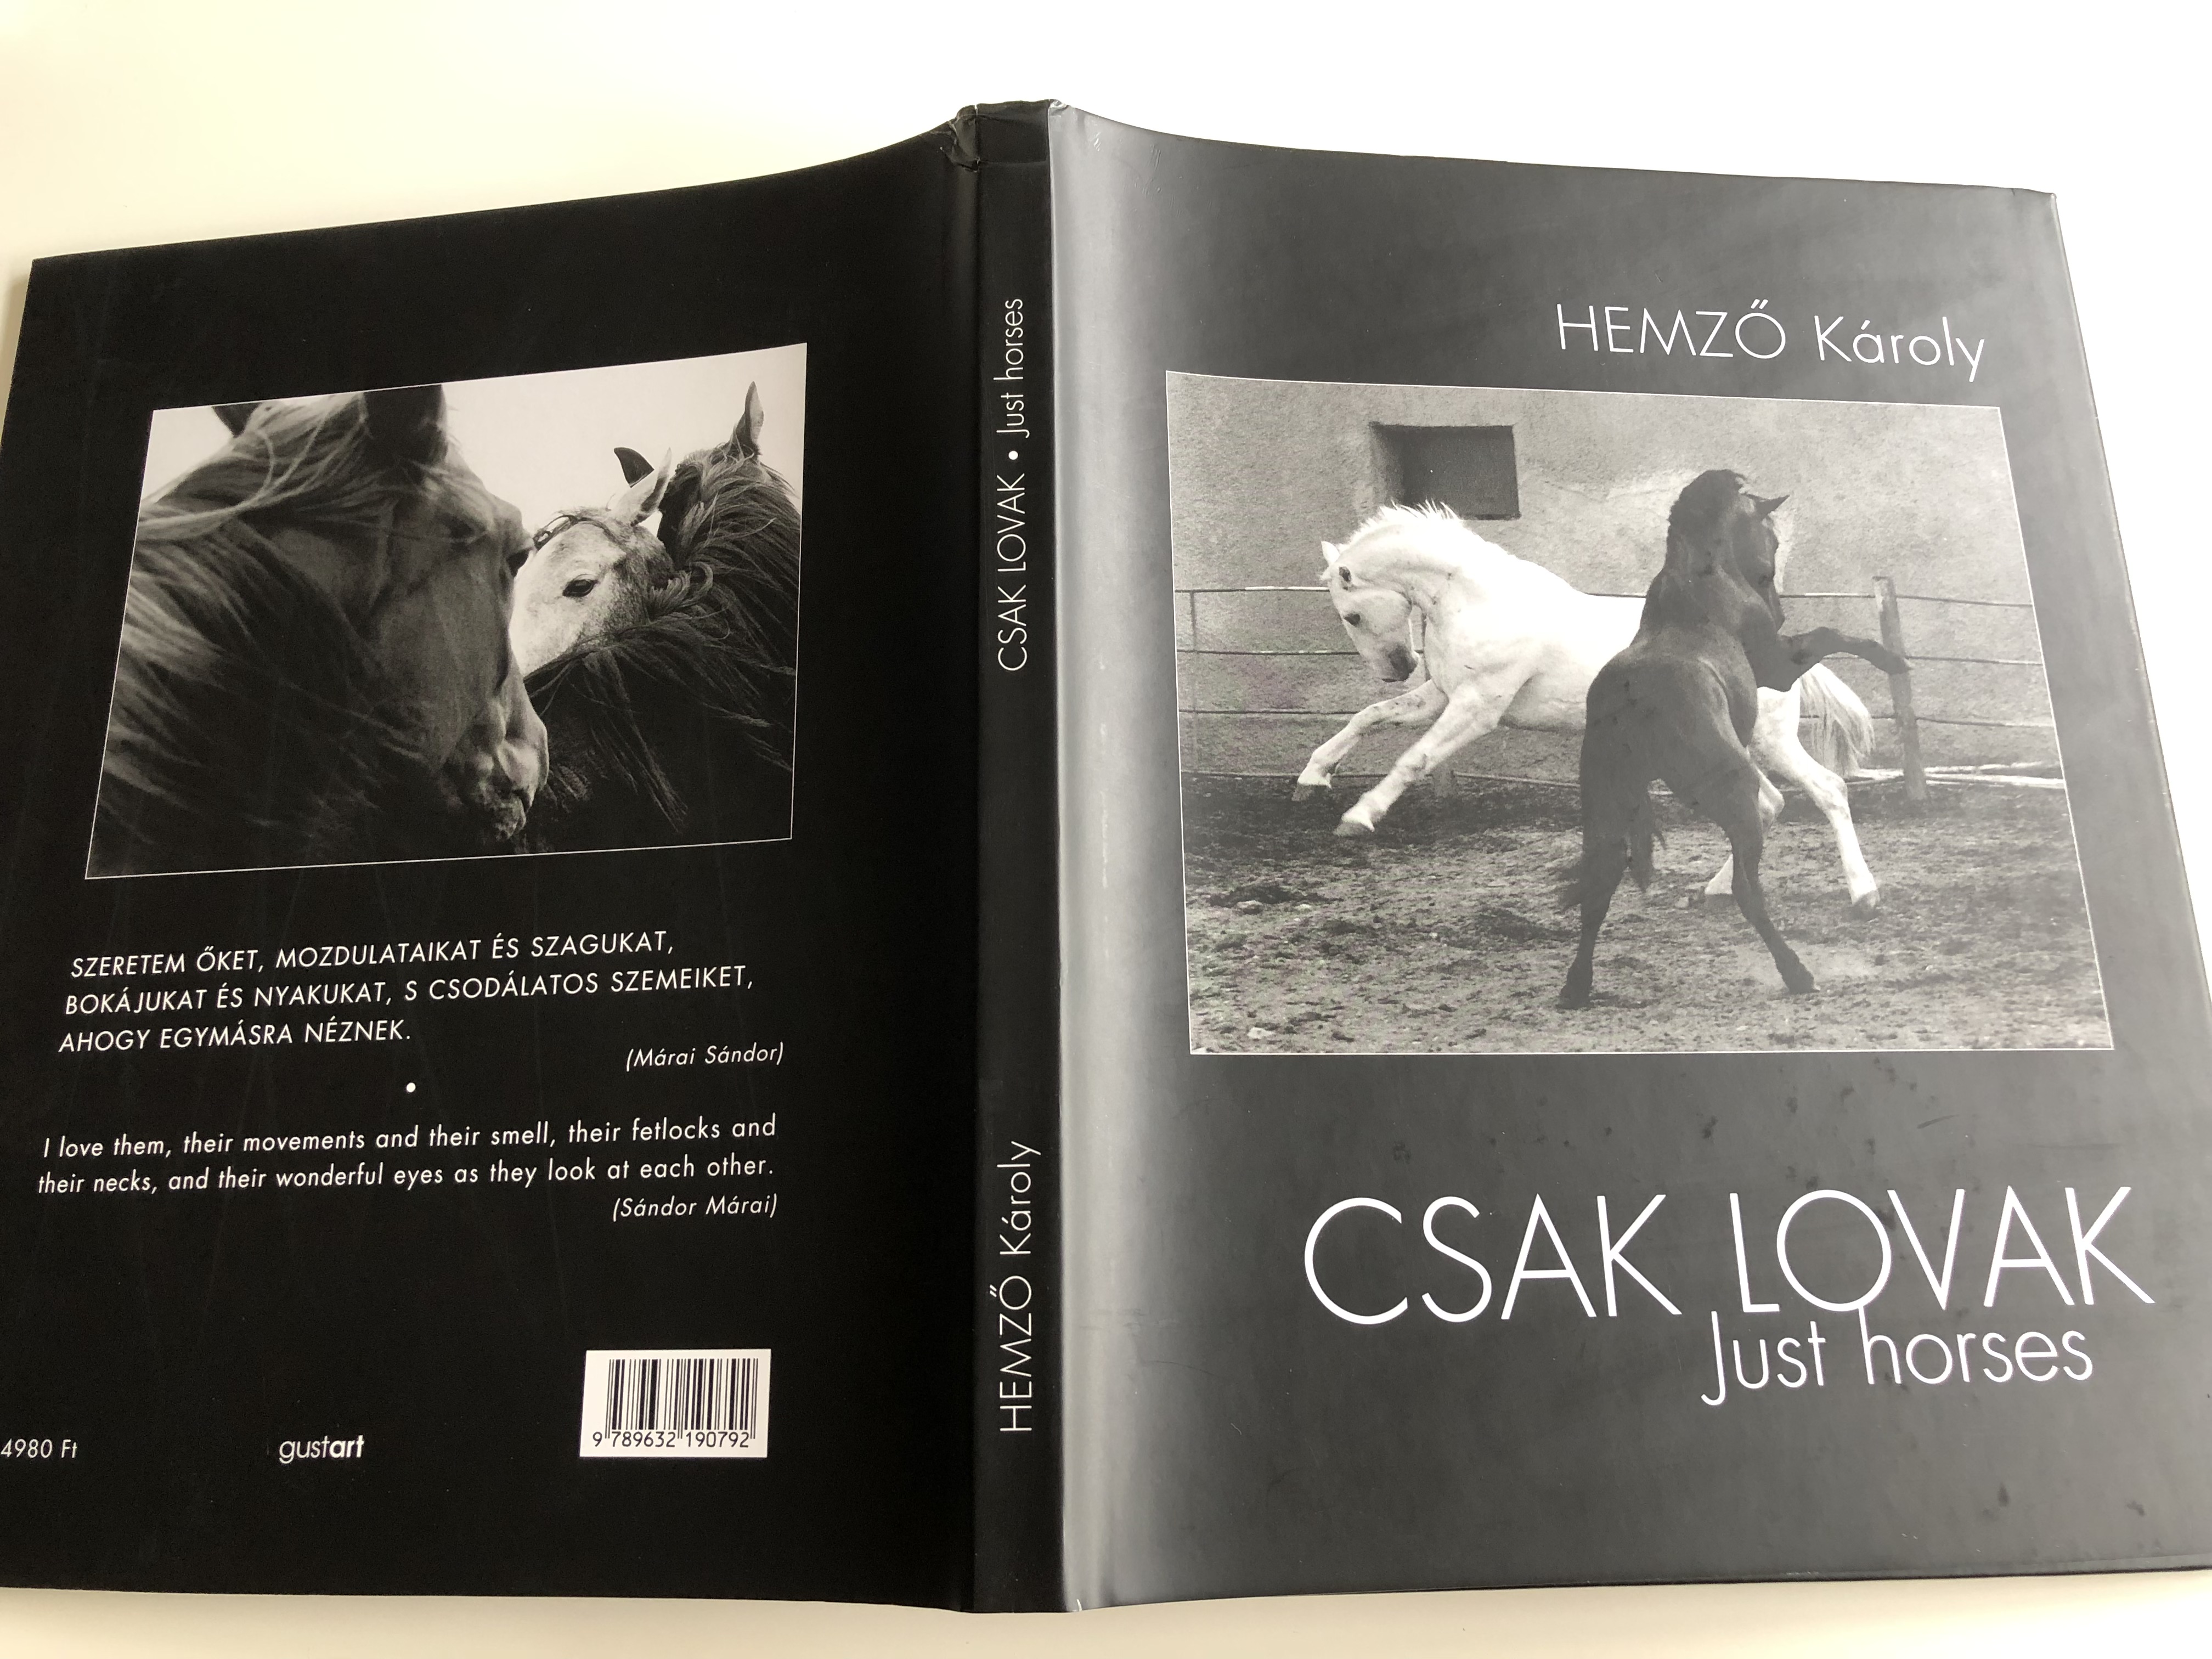 csak-lovak-just-horses-by-hemz-k-roly-photo-album-about-horses-gust-art-hardcover-2005-19-.jpg